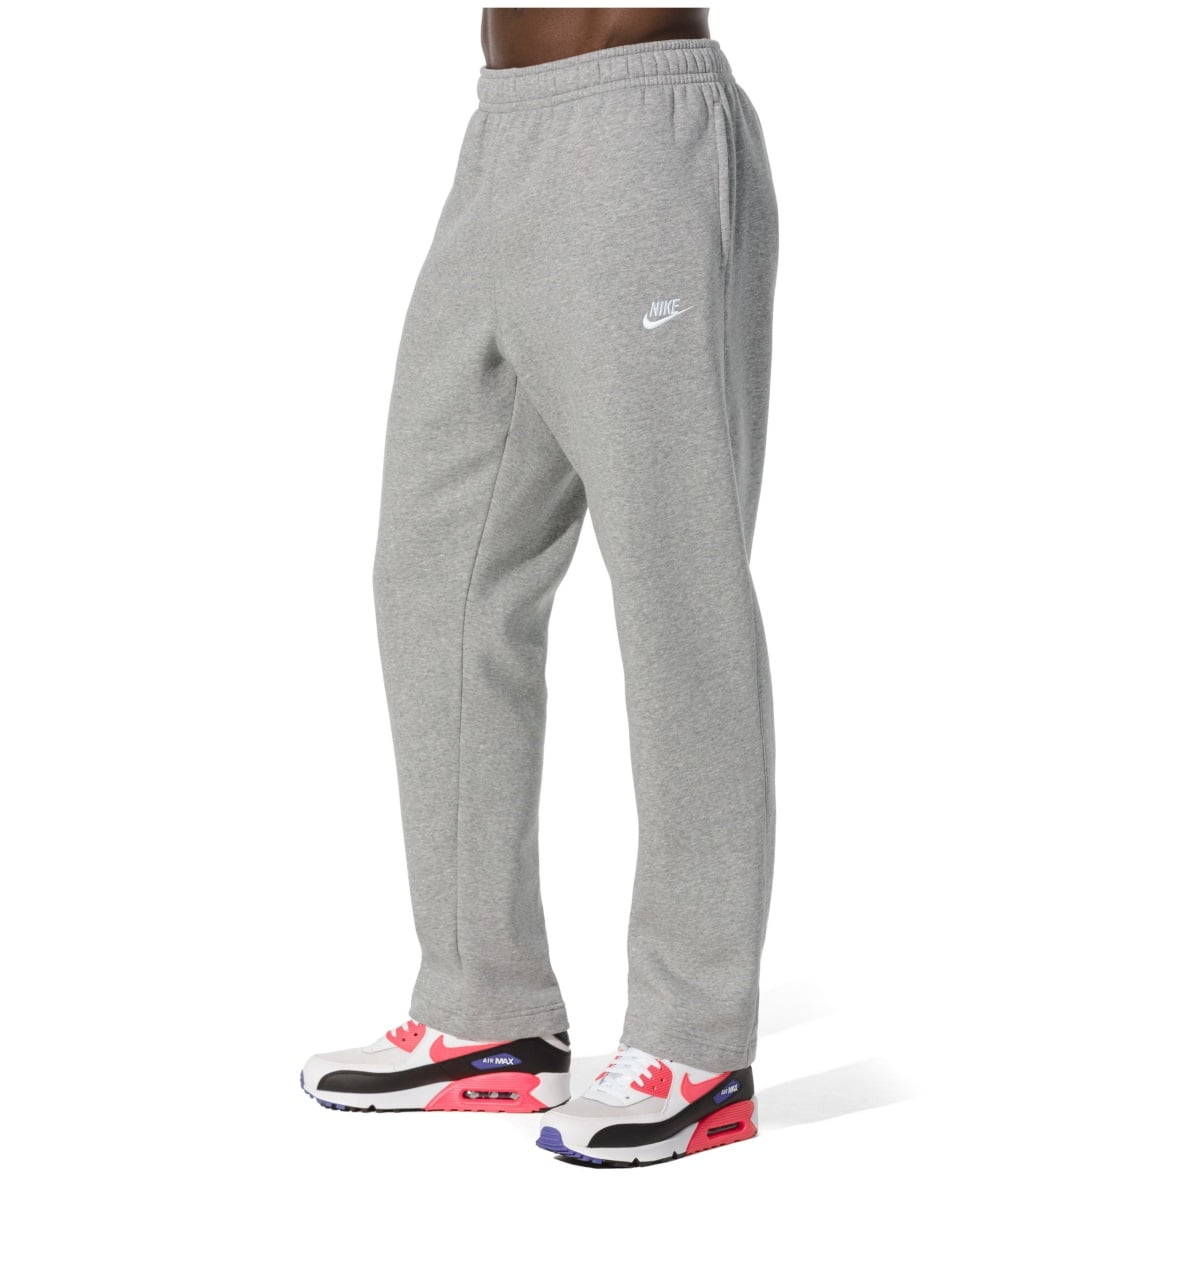 Nike Men's Club Pant Open Pants Gray Size Small